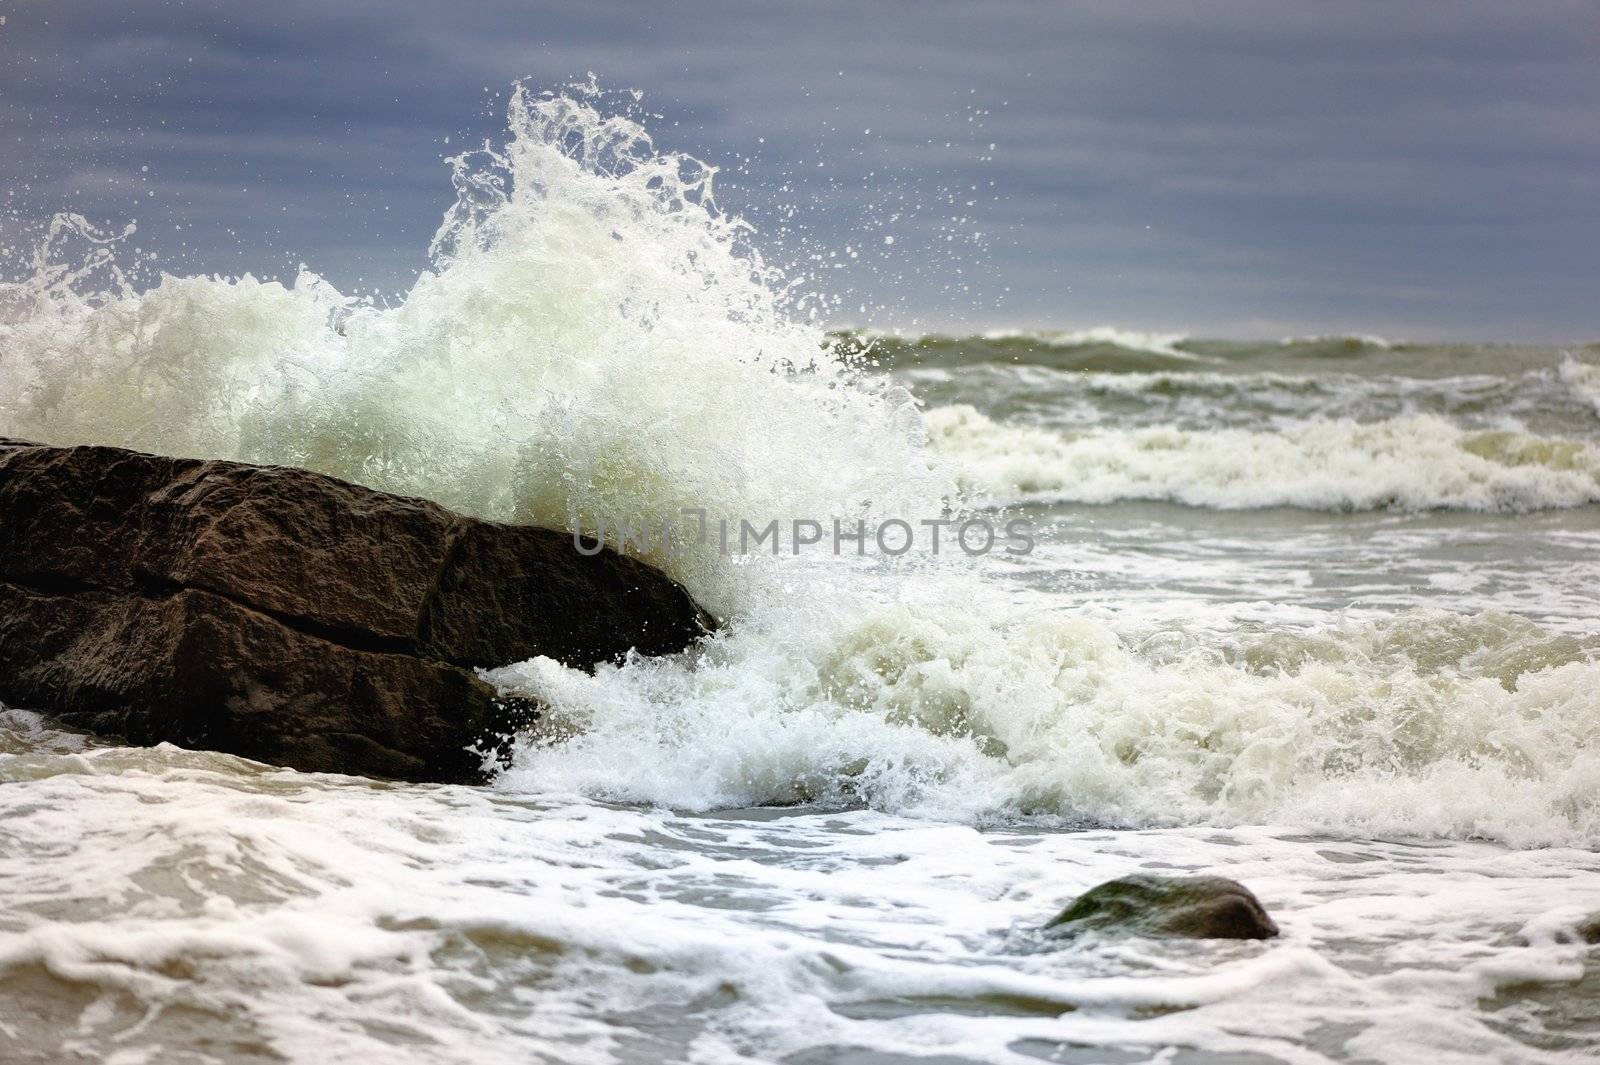 Foamy waves from a storm near the sea cliffs